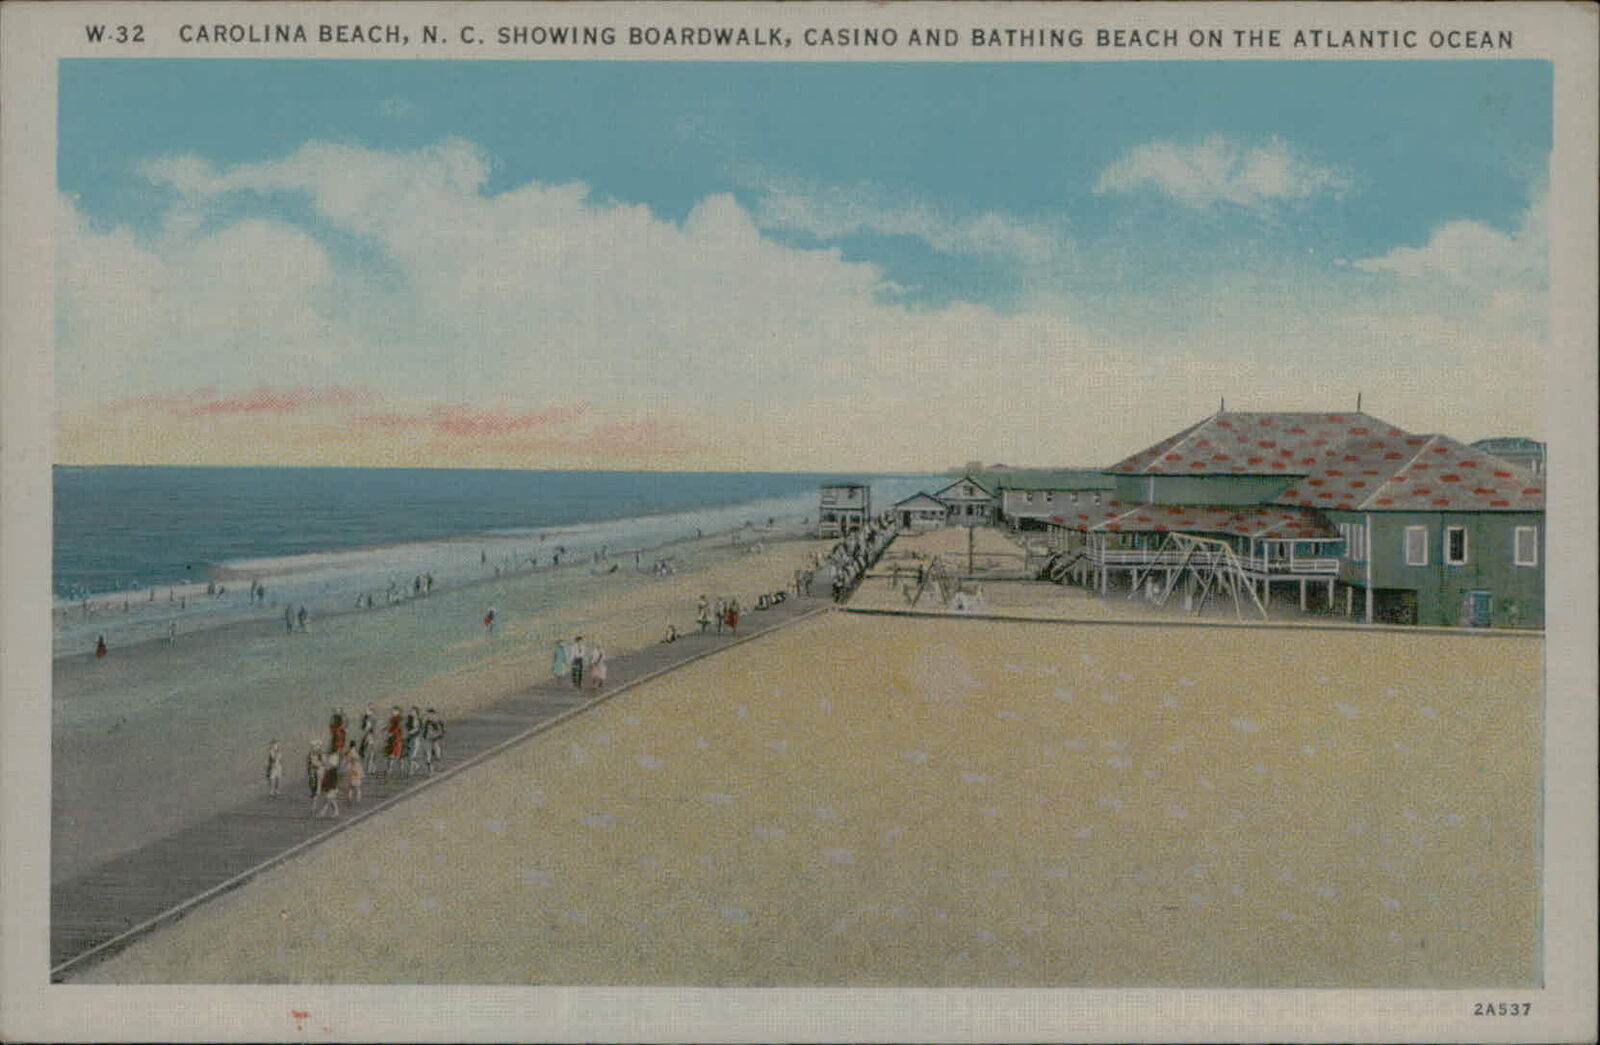 Postcard: W.32 CAROLINA BEACH, N. C. SHOWING BOARDWALK, CASINO AND BAT